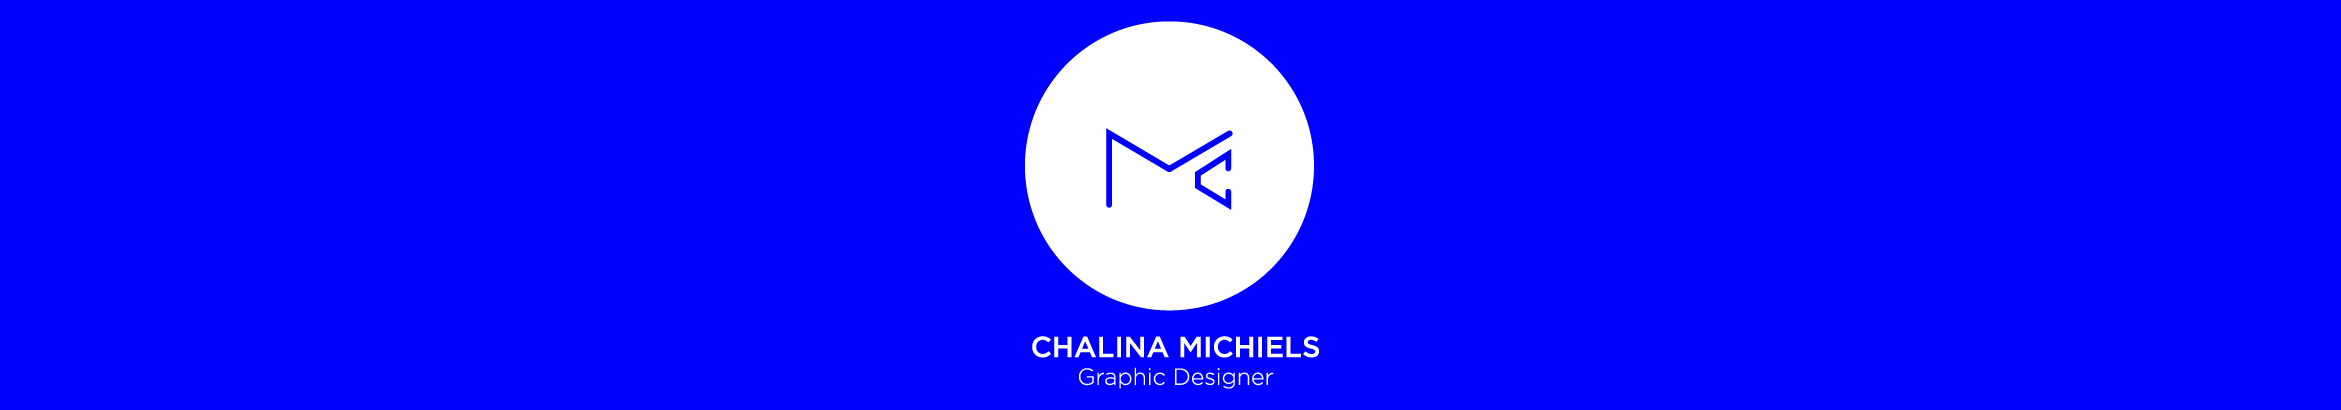 Chalina Michiels's profile banner